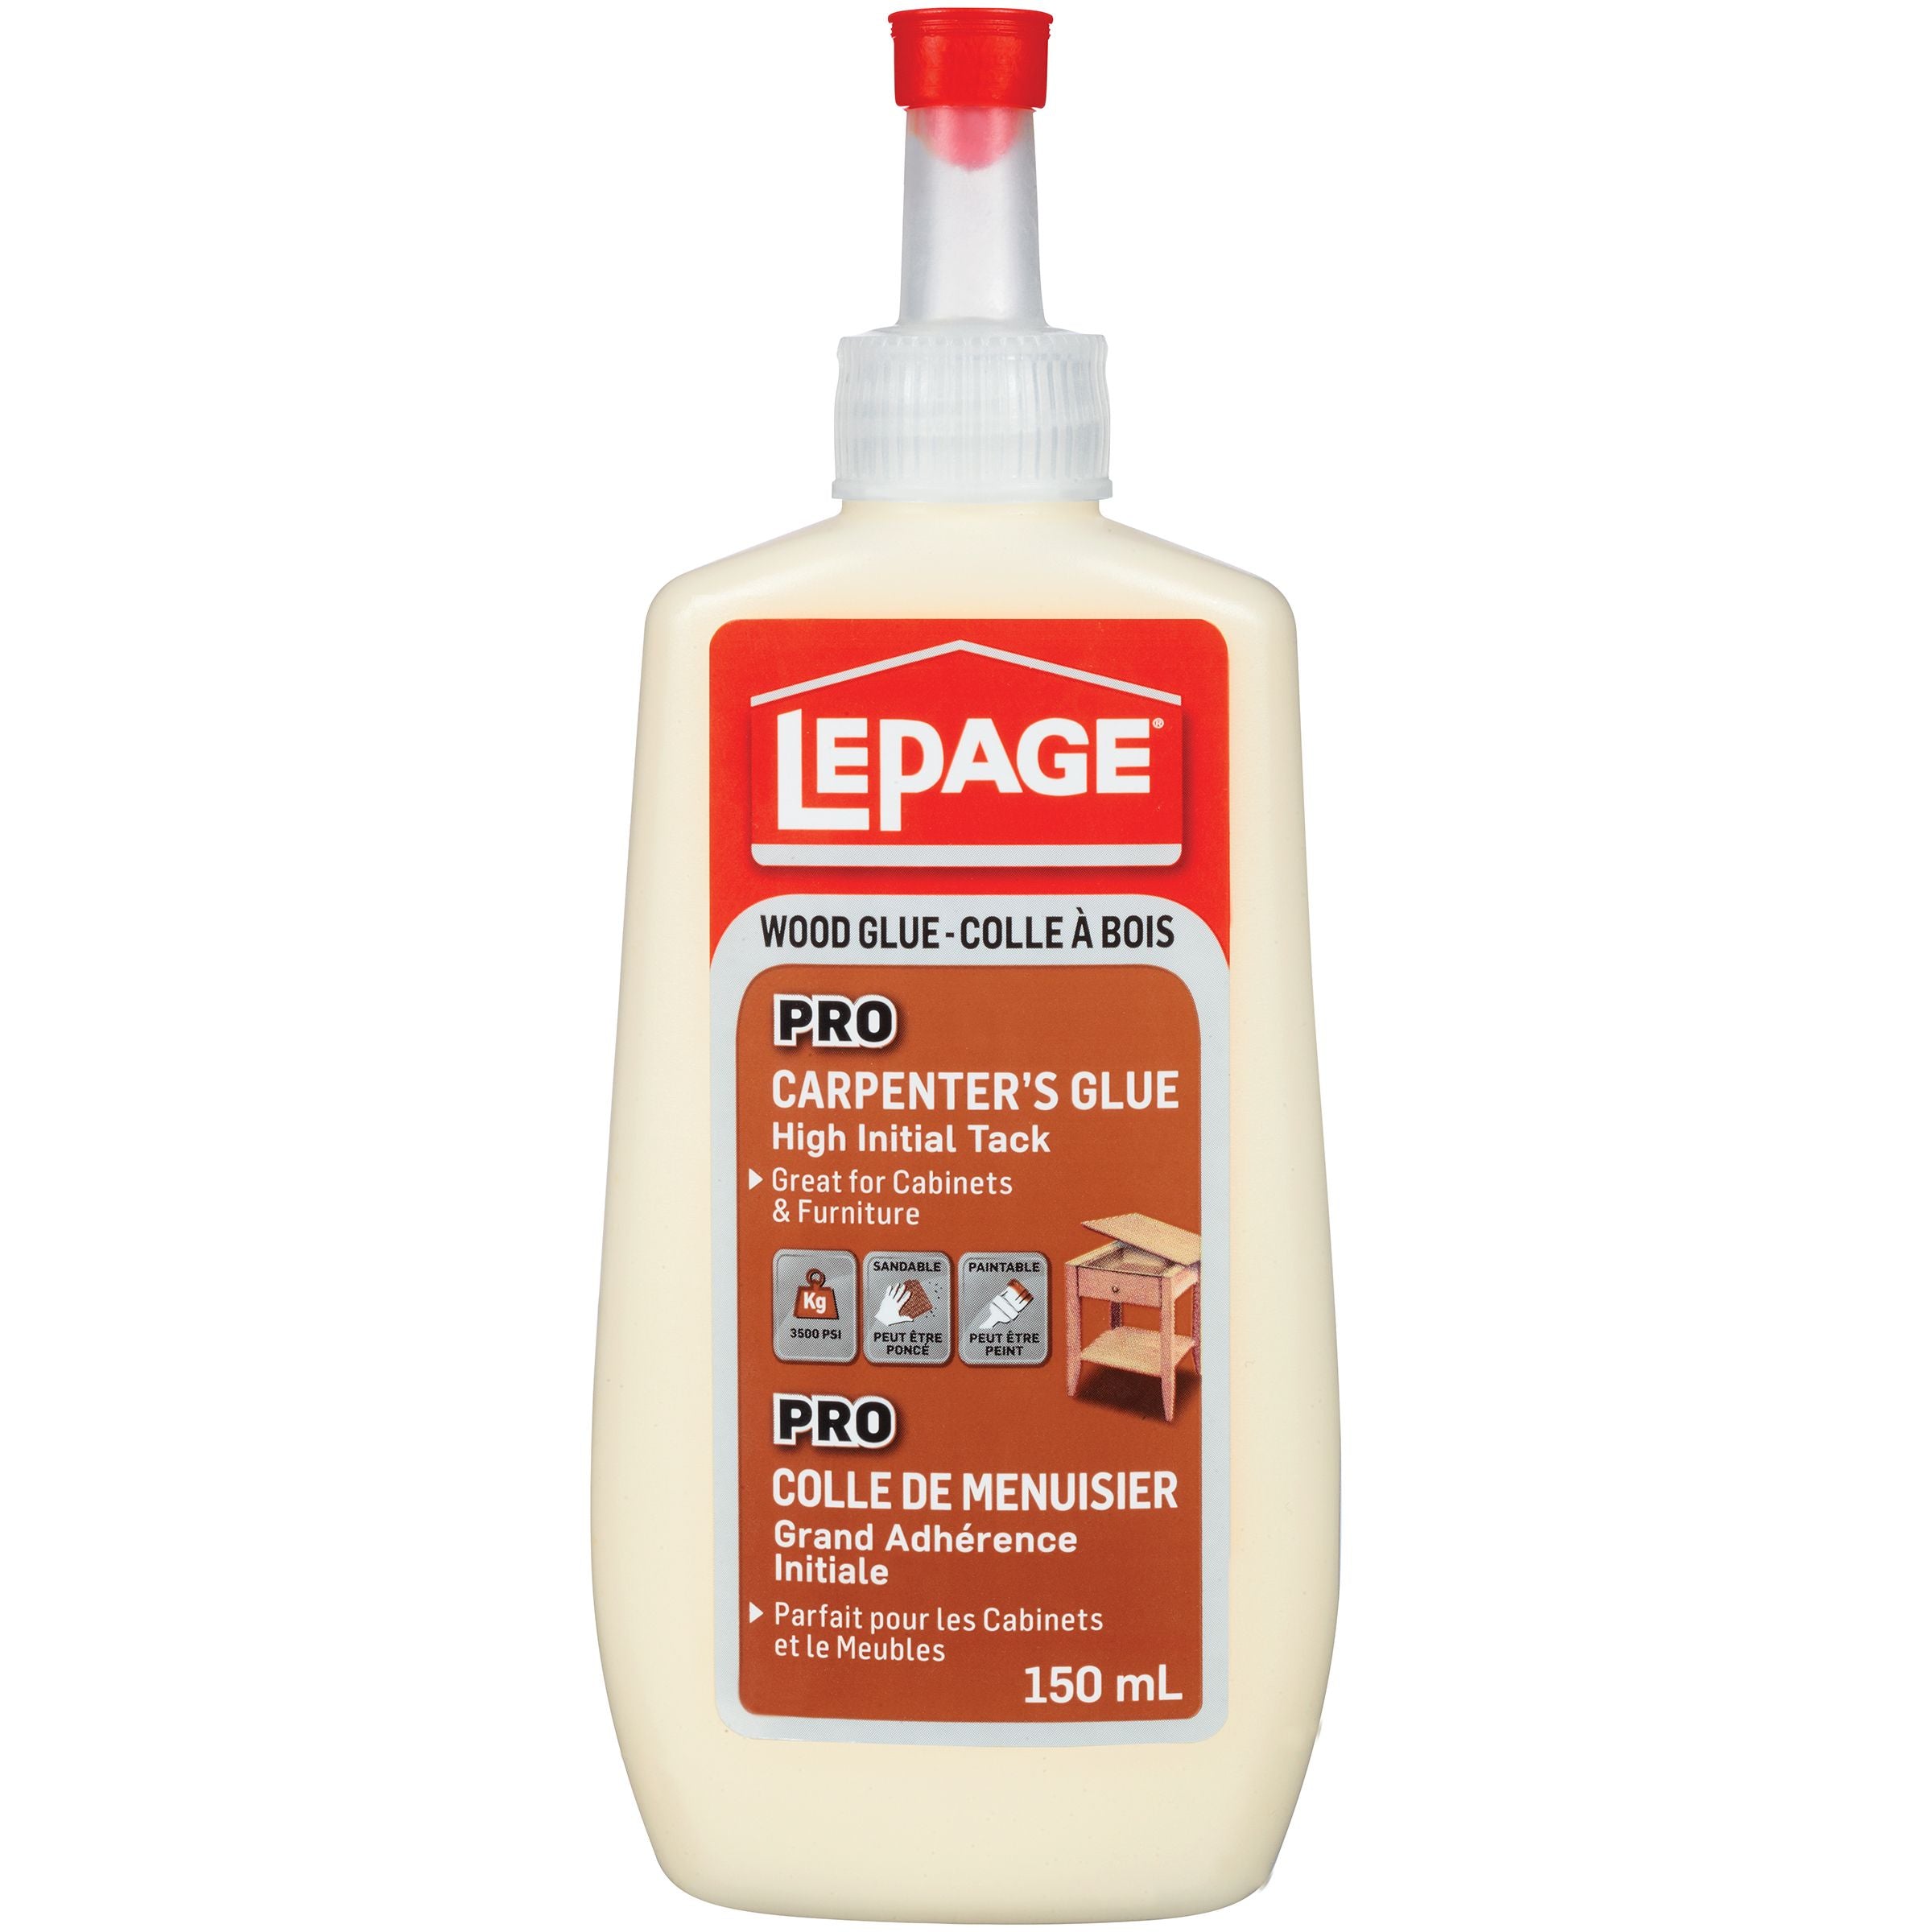 LePage Pro Carpenter’s Glue, Translucent Pale Yellow, 150 ml Bottle, Pack of 1